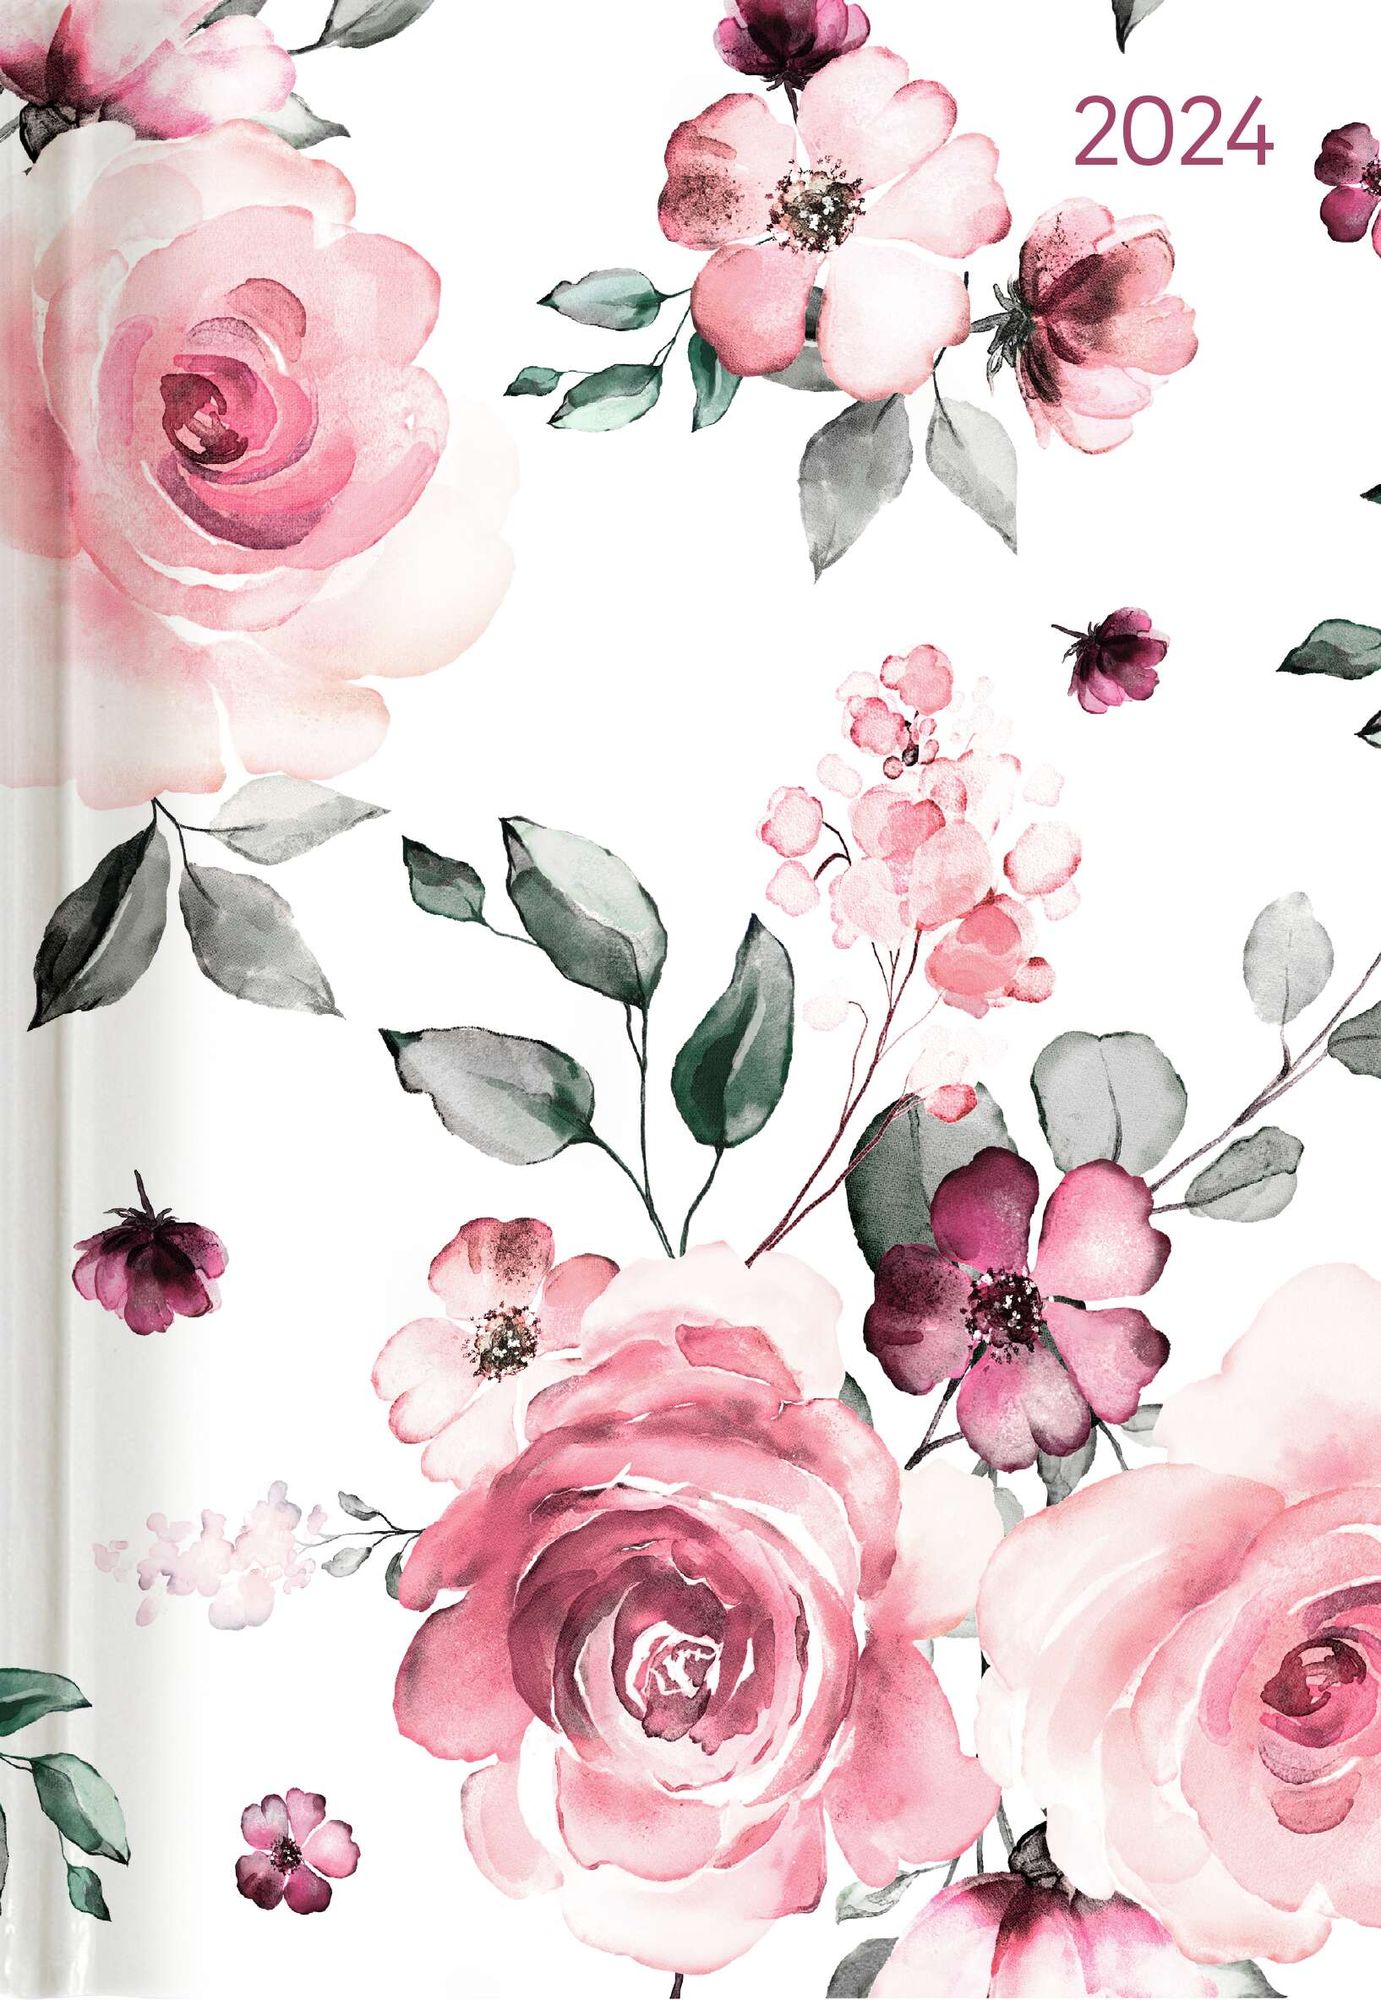 https://images.thalia.media/-/BF2000-2000/8f9fcea3d8324f54bb9abdbfaf615a78/buchkalender-style-roses-2024-buero-kalender-a5-cheftimer-1-tag-1-seite-352-seiten-rose-alpha-edition.jpeg